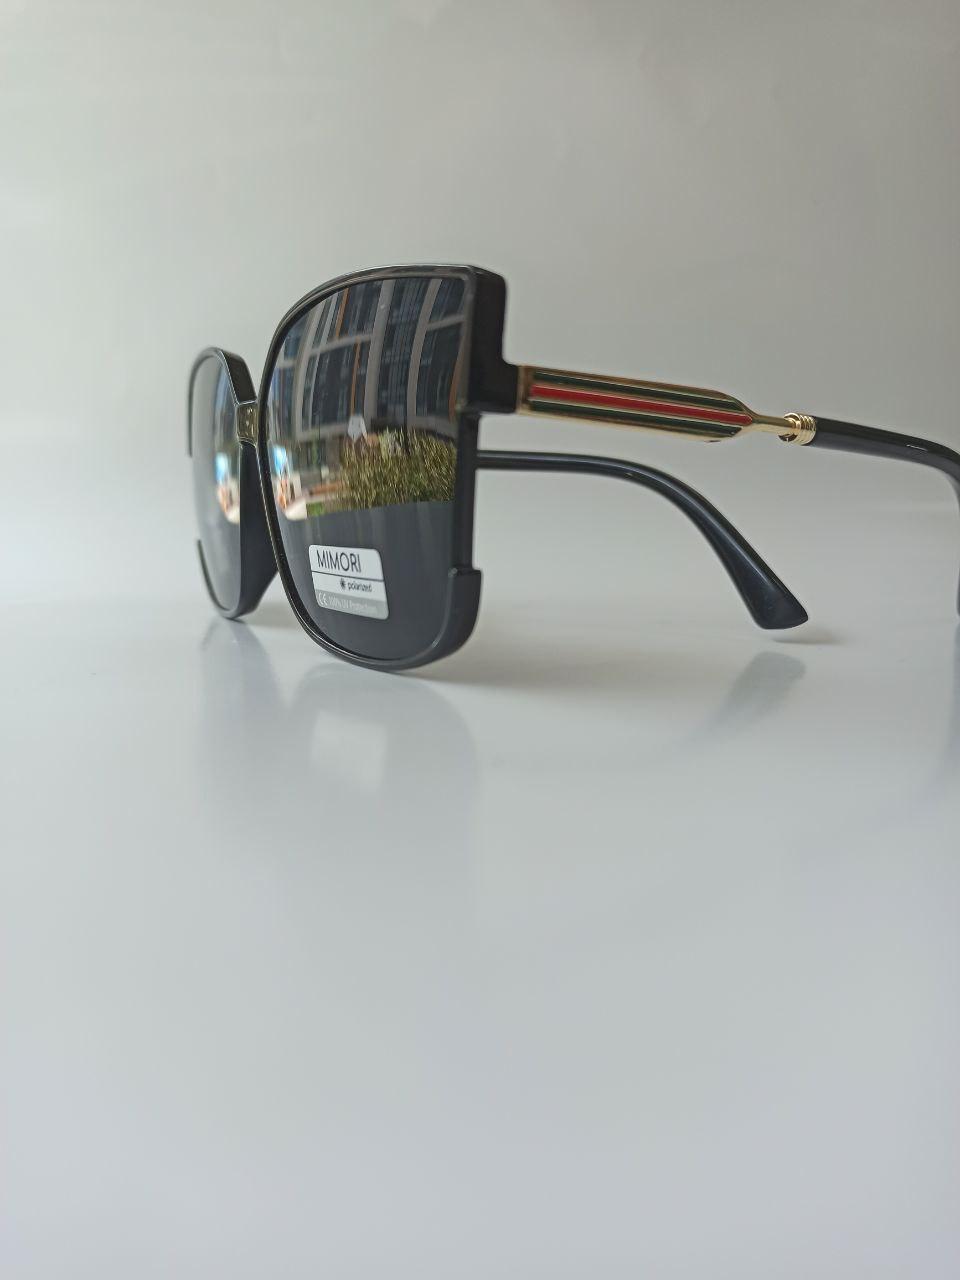 Солнцезащитные очки MIMORI